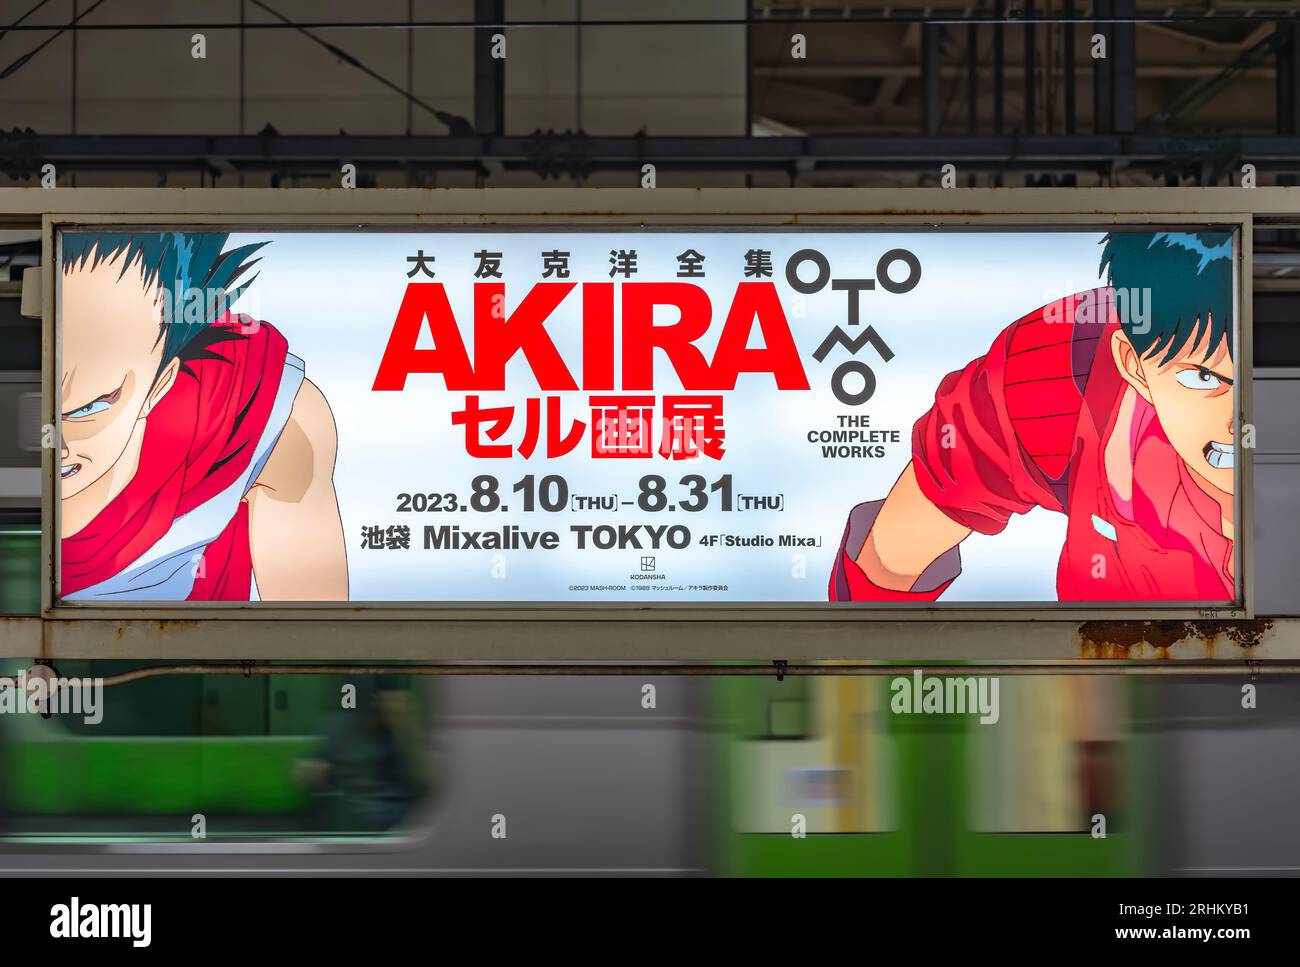 tokyo, akihabara - aug 11 2023: Neon sign lighting a celluloid illustration of Tetsuo and Kaneda from the Japanese anime and manga Akira Stock Photo